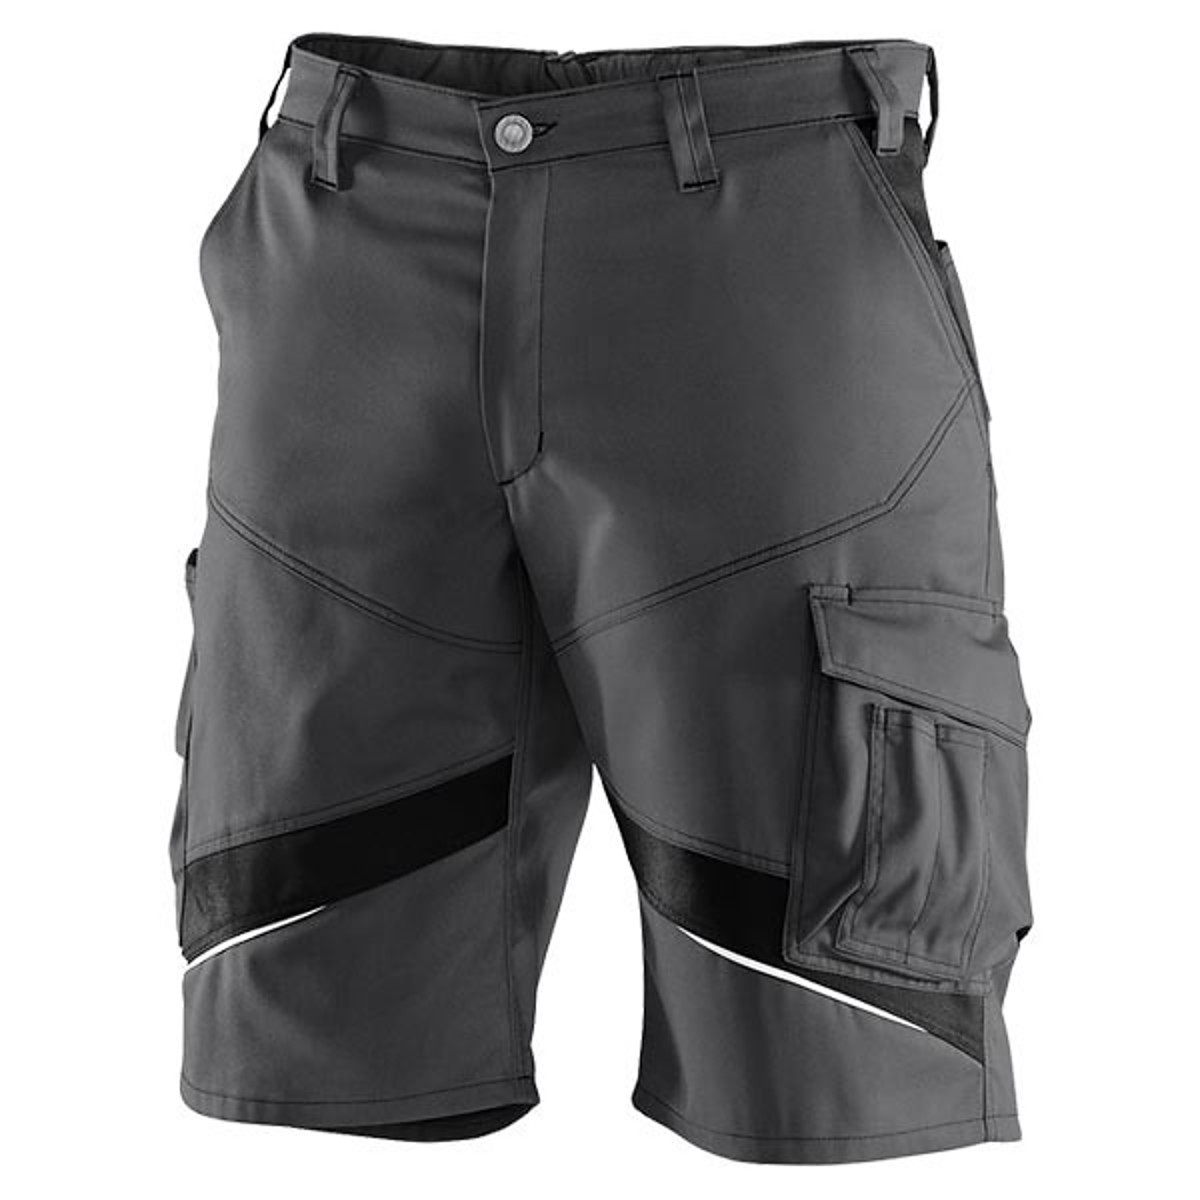 Kübler Activiq Shorts - 3